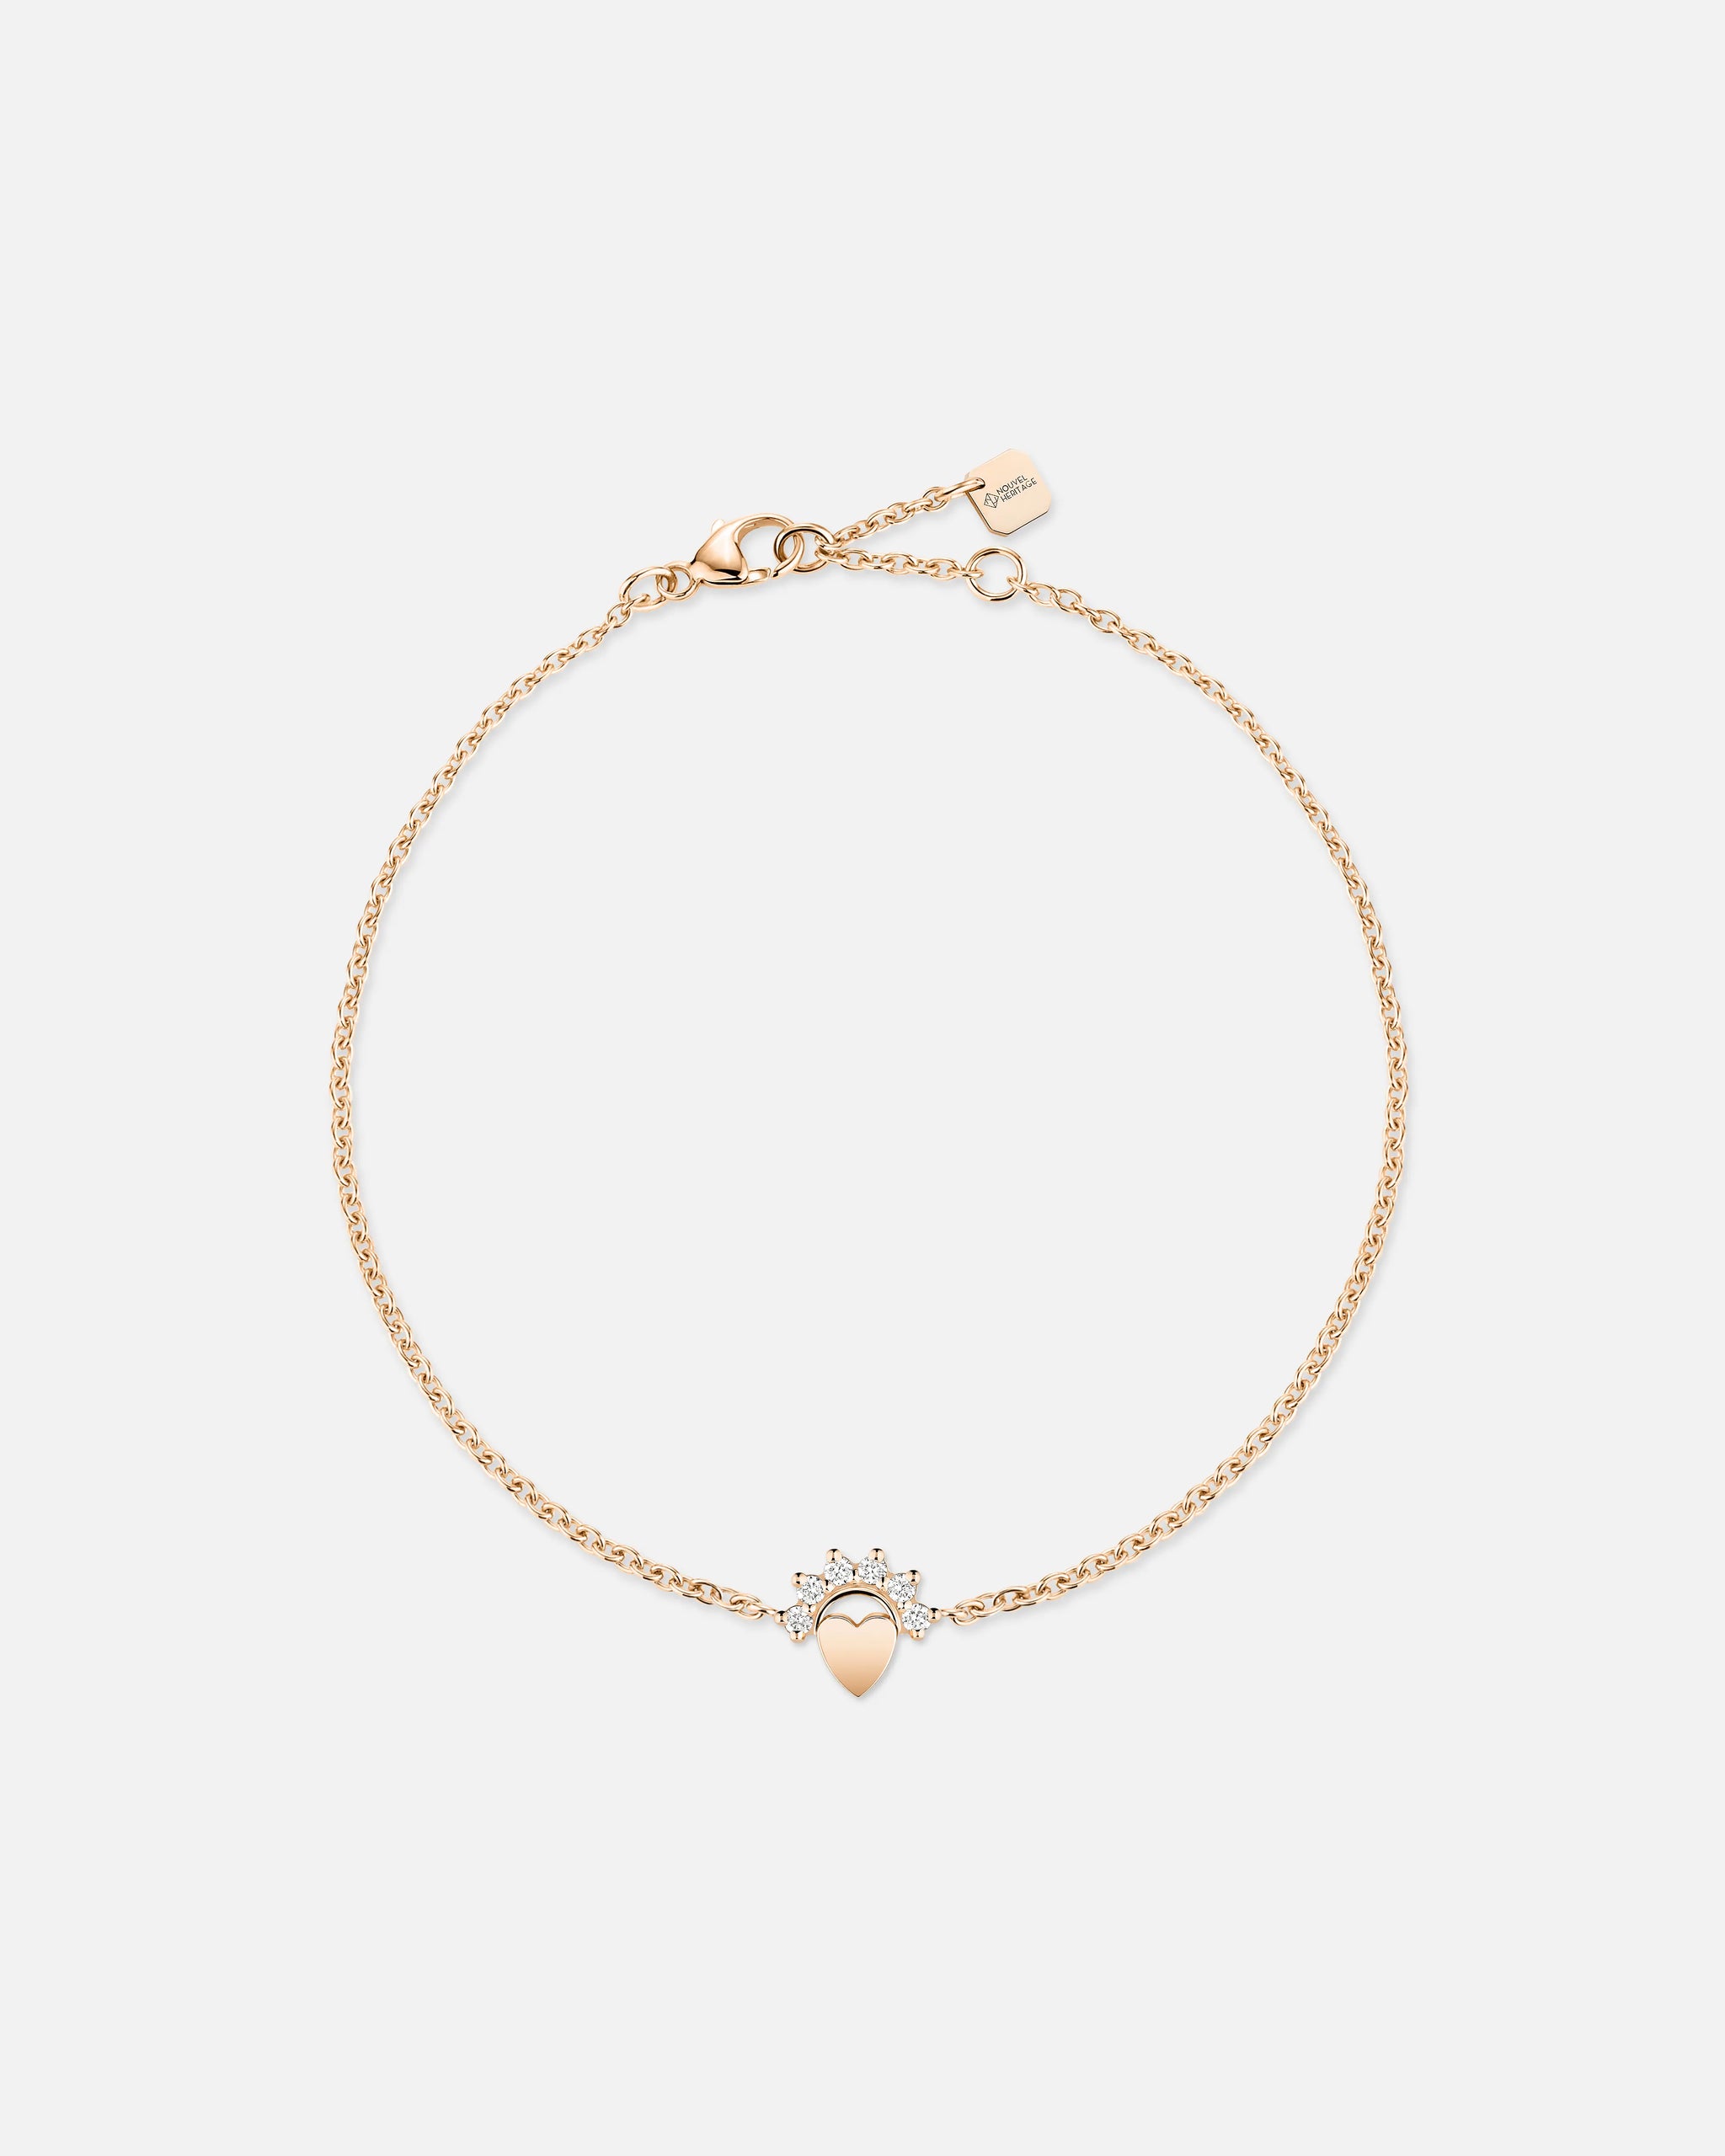 Small Love Bracelet in Rose Gold - 1 - Nouvel Heritage